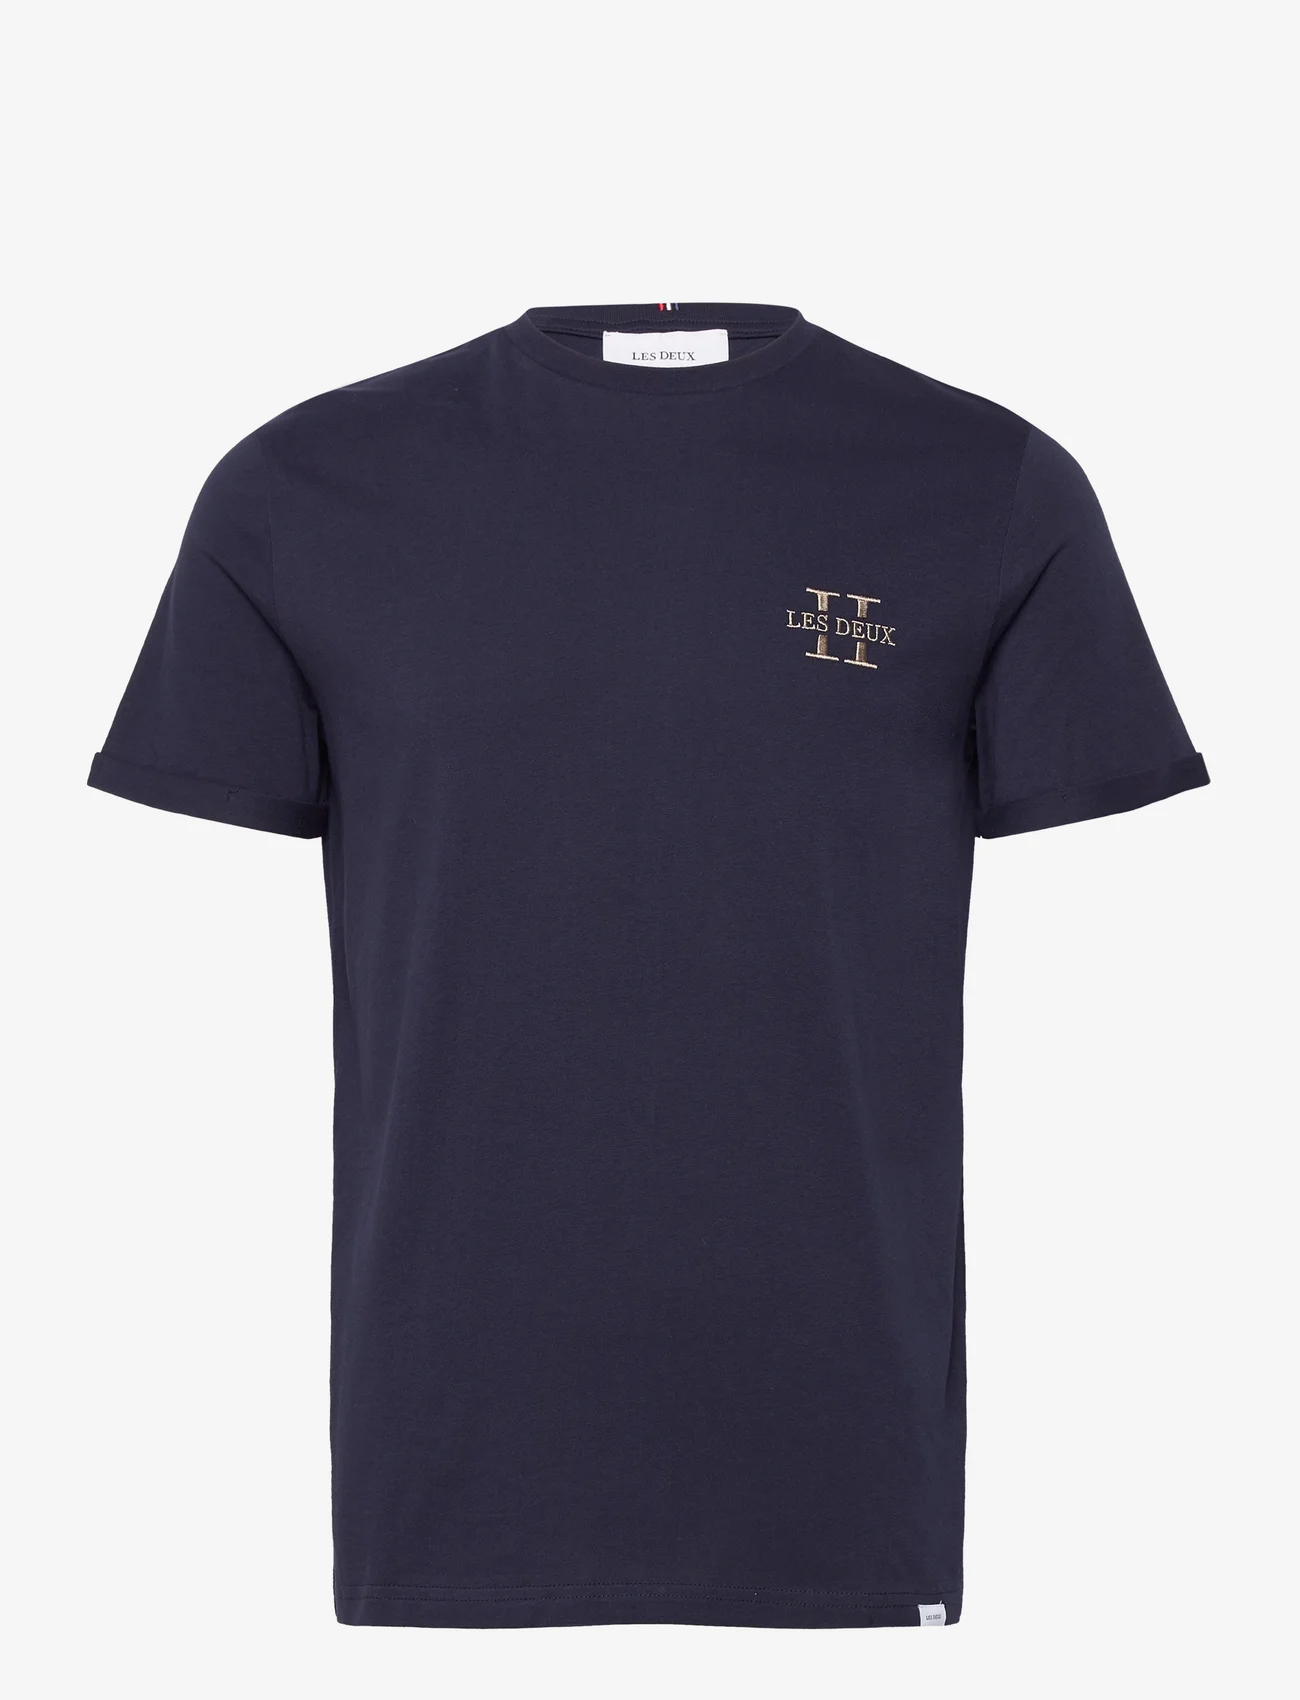 Les Deux - Les Deux II T-Shirt 2.0 - kurzärmelige - dark navy/platinum - 0